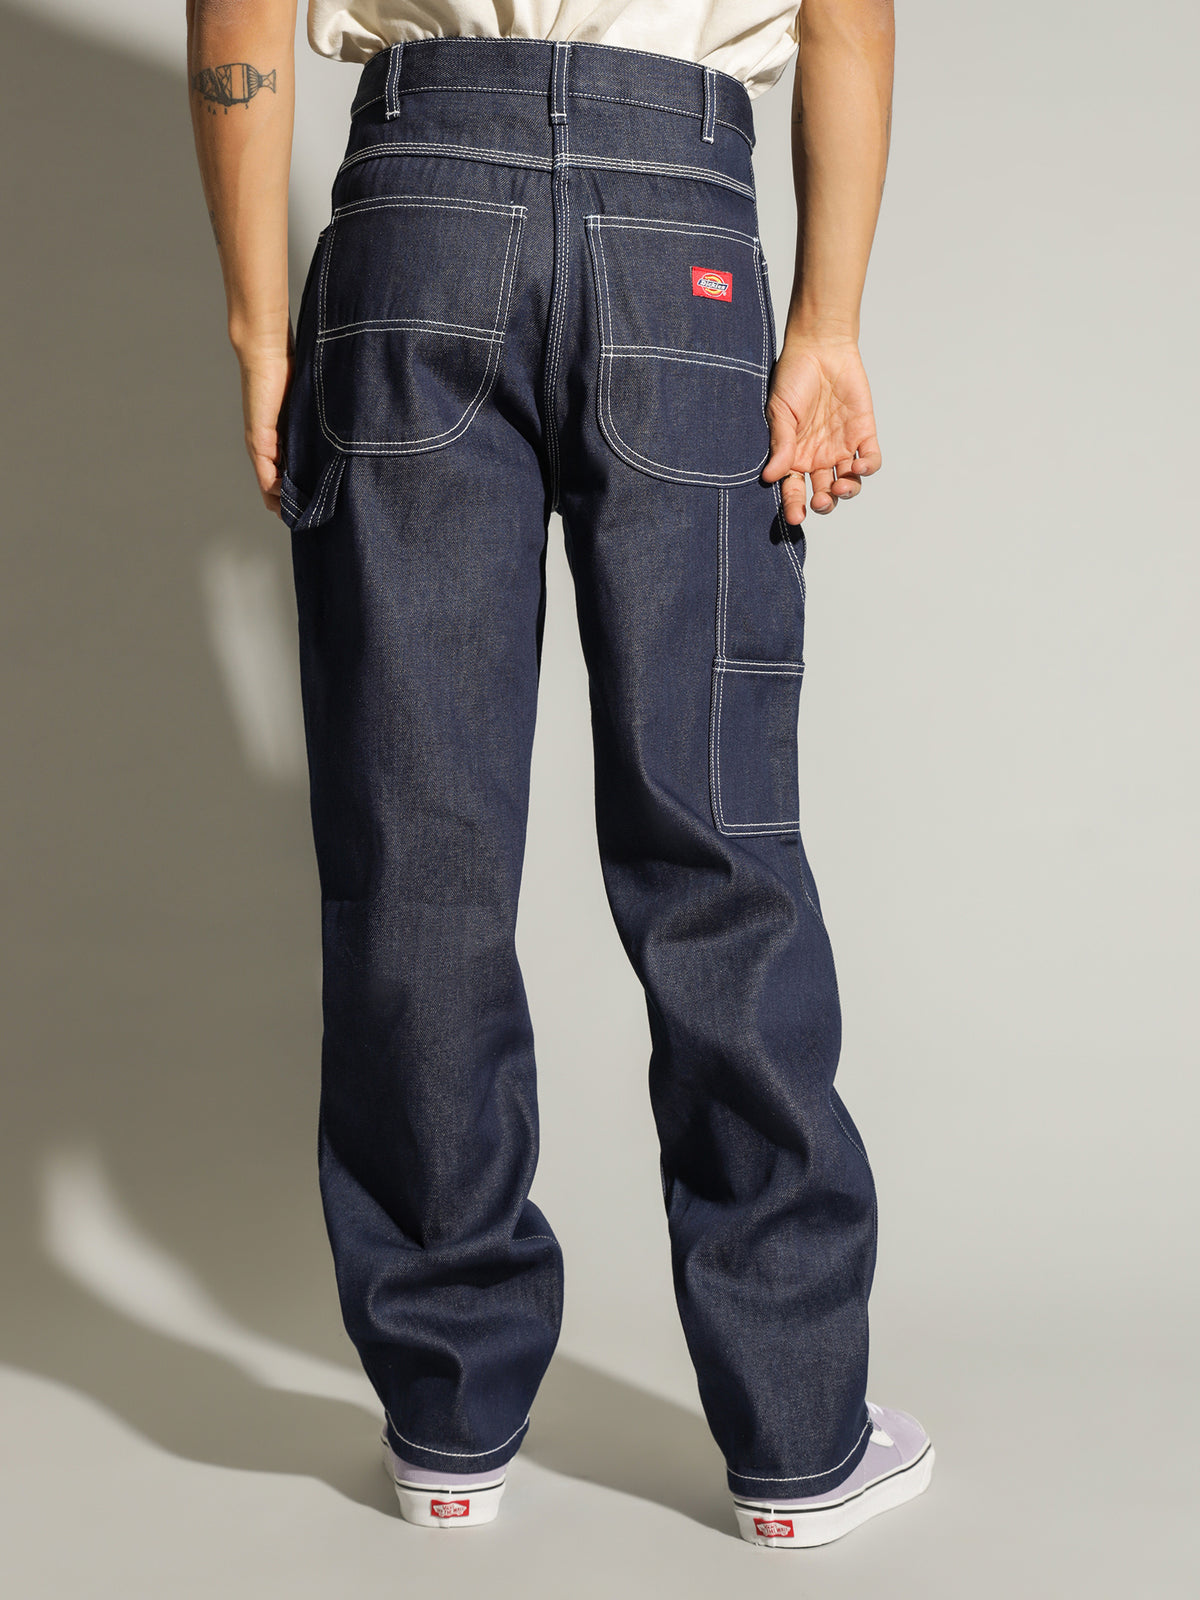 Straight Fit Carpenter Jeans in Indigo